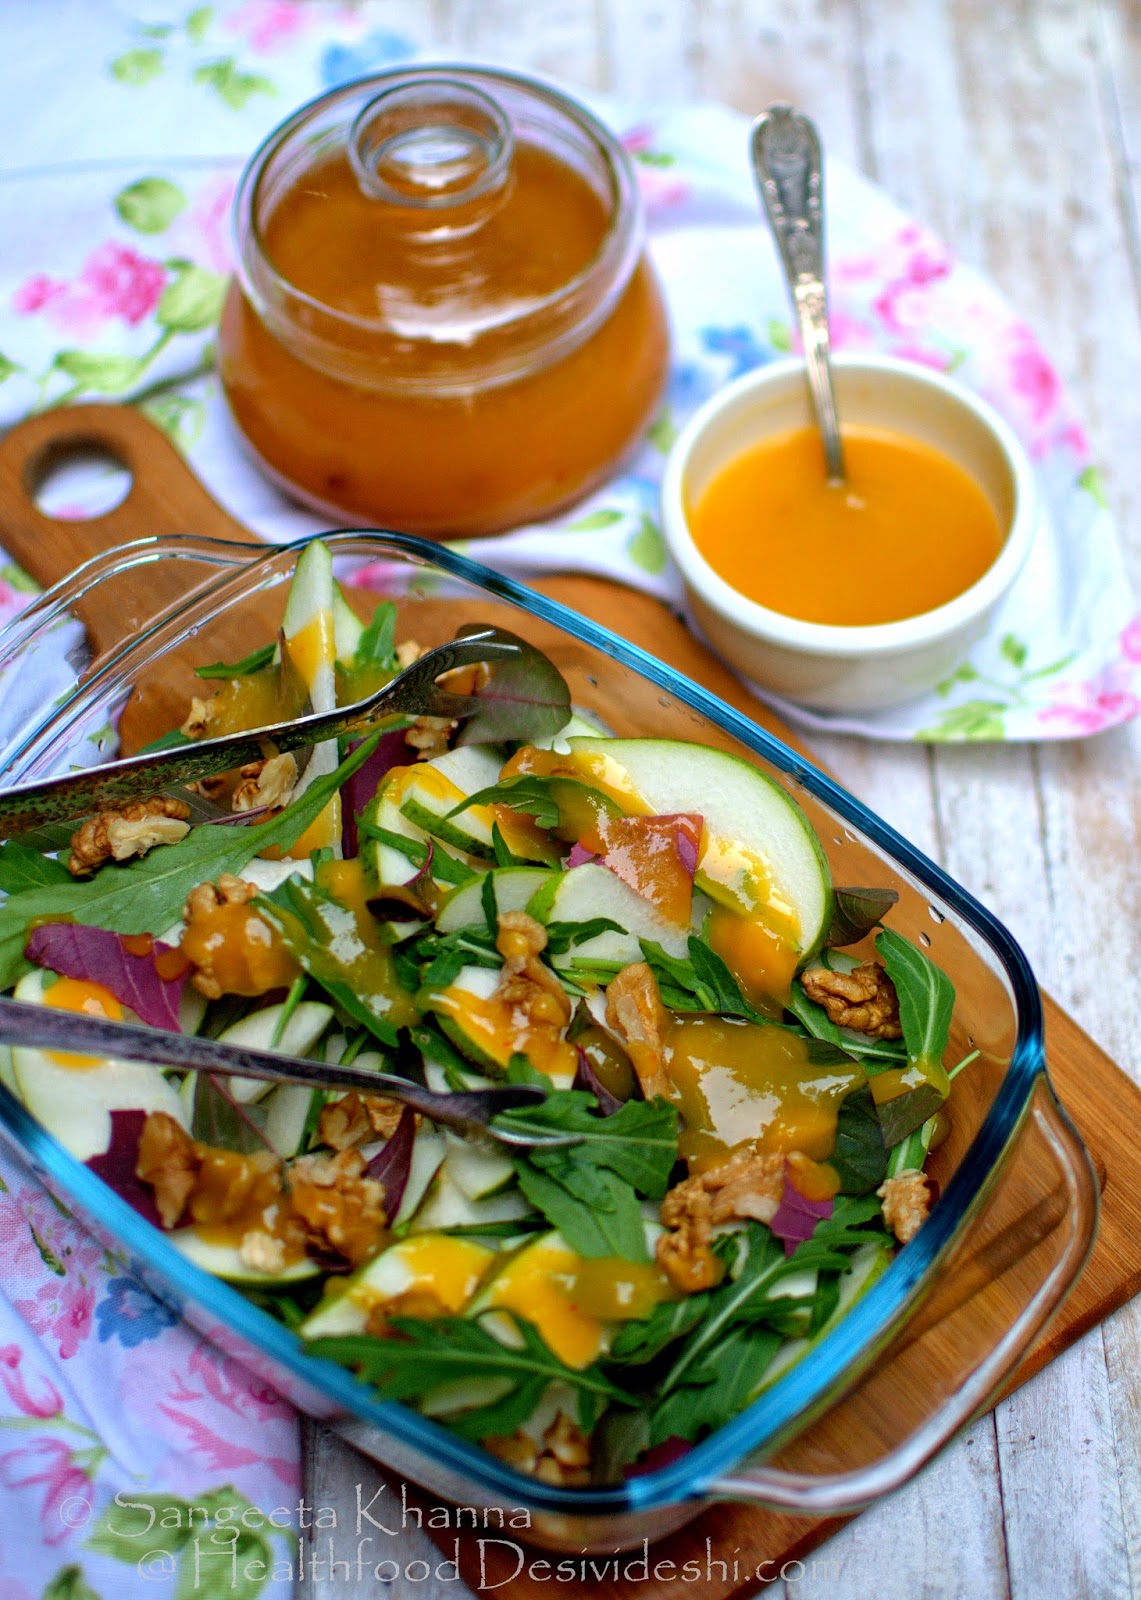 pear and rucola salad with walnuts and mango chutney dressing | a keeper recipe of mango chutney 